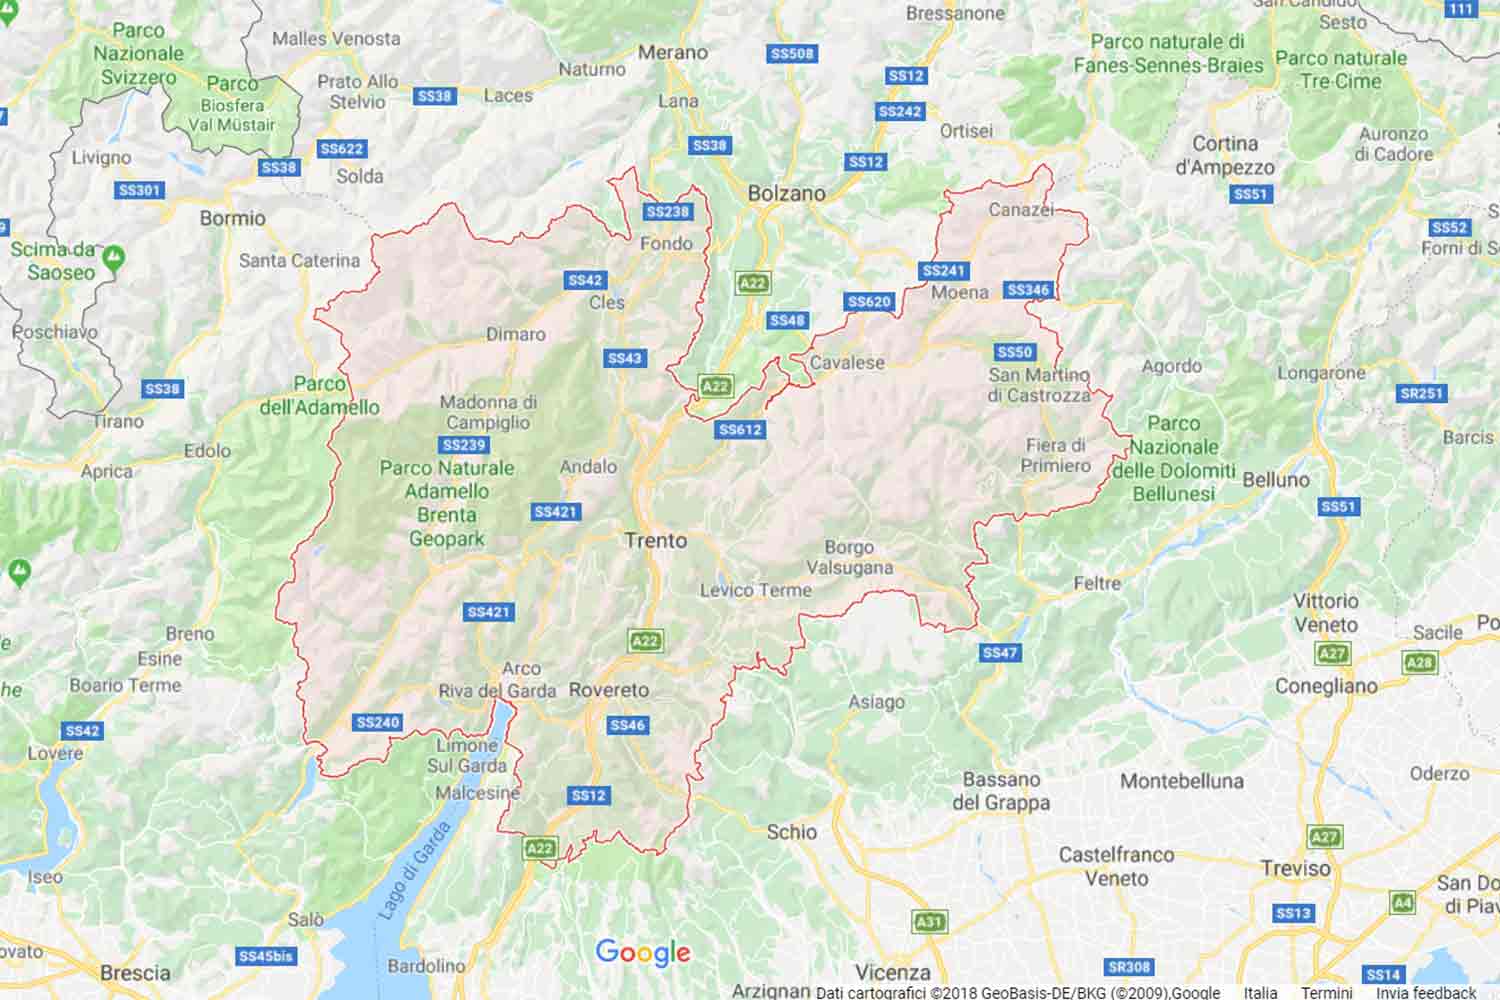 Trentino - Trento - Strembo Preventivi Veloci google maps